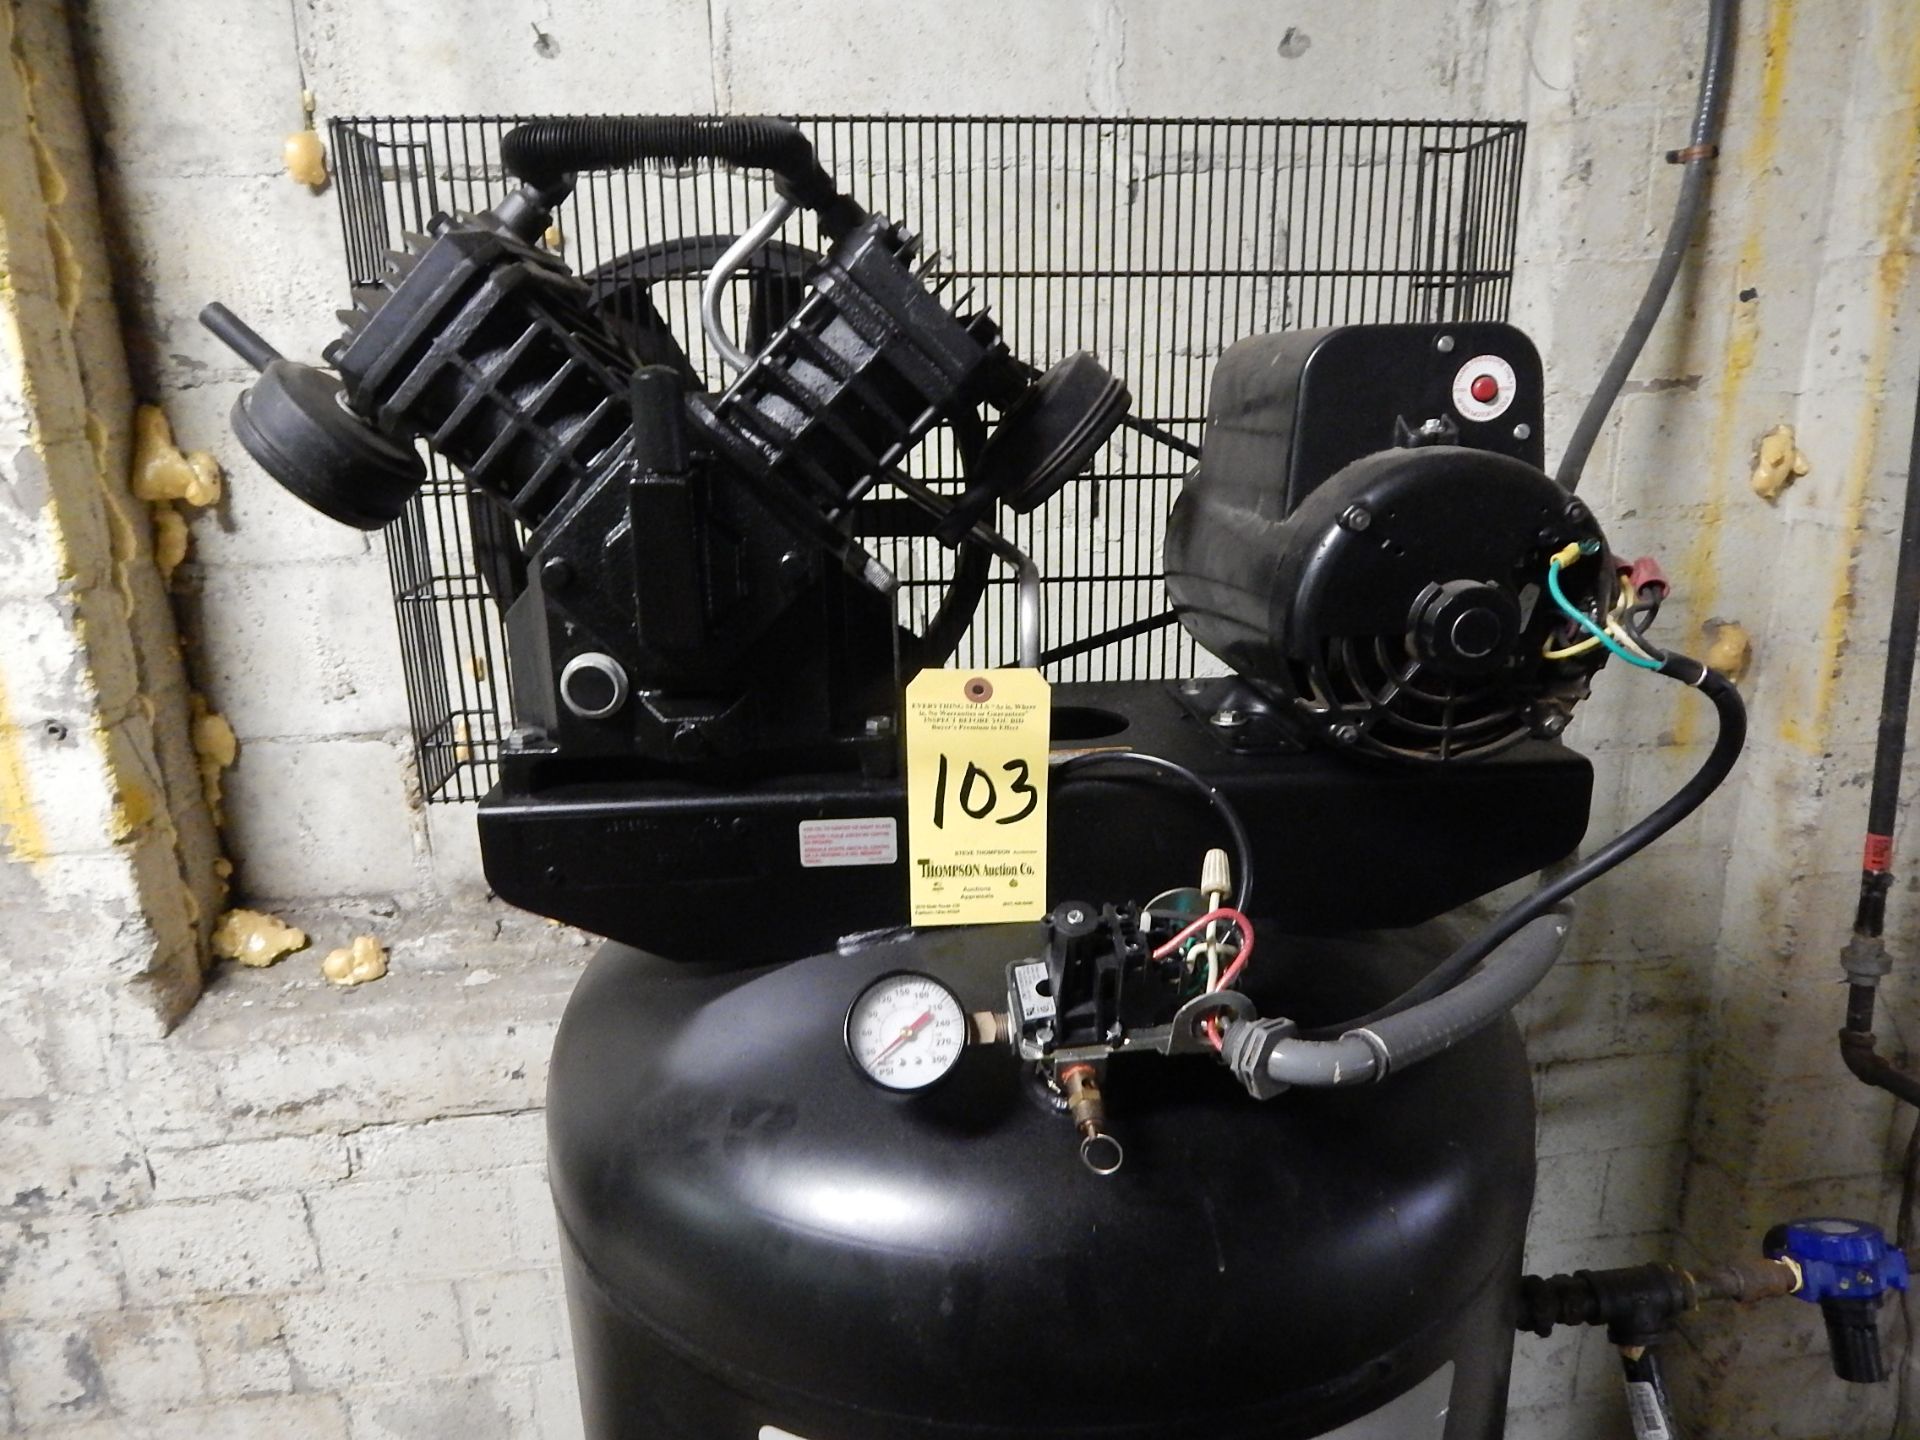 Kobalt 5 HP Air Compressor, s/n 1908591, New 2015, Loading Fee $100.00 - Image 3 of 3